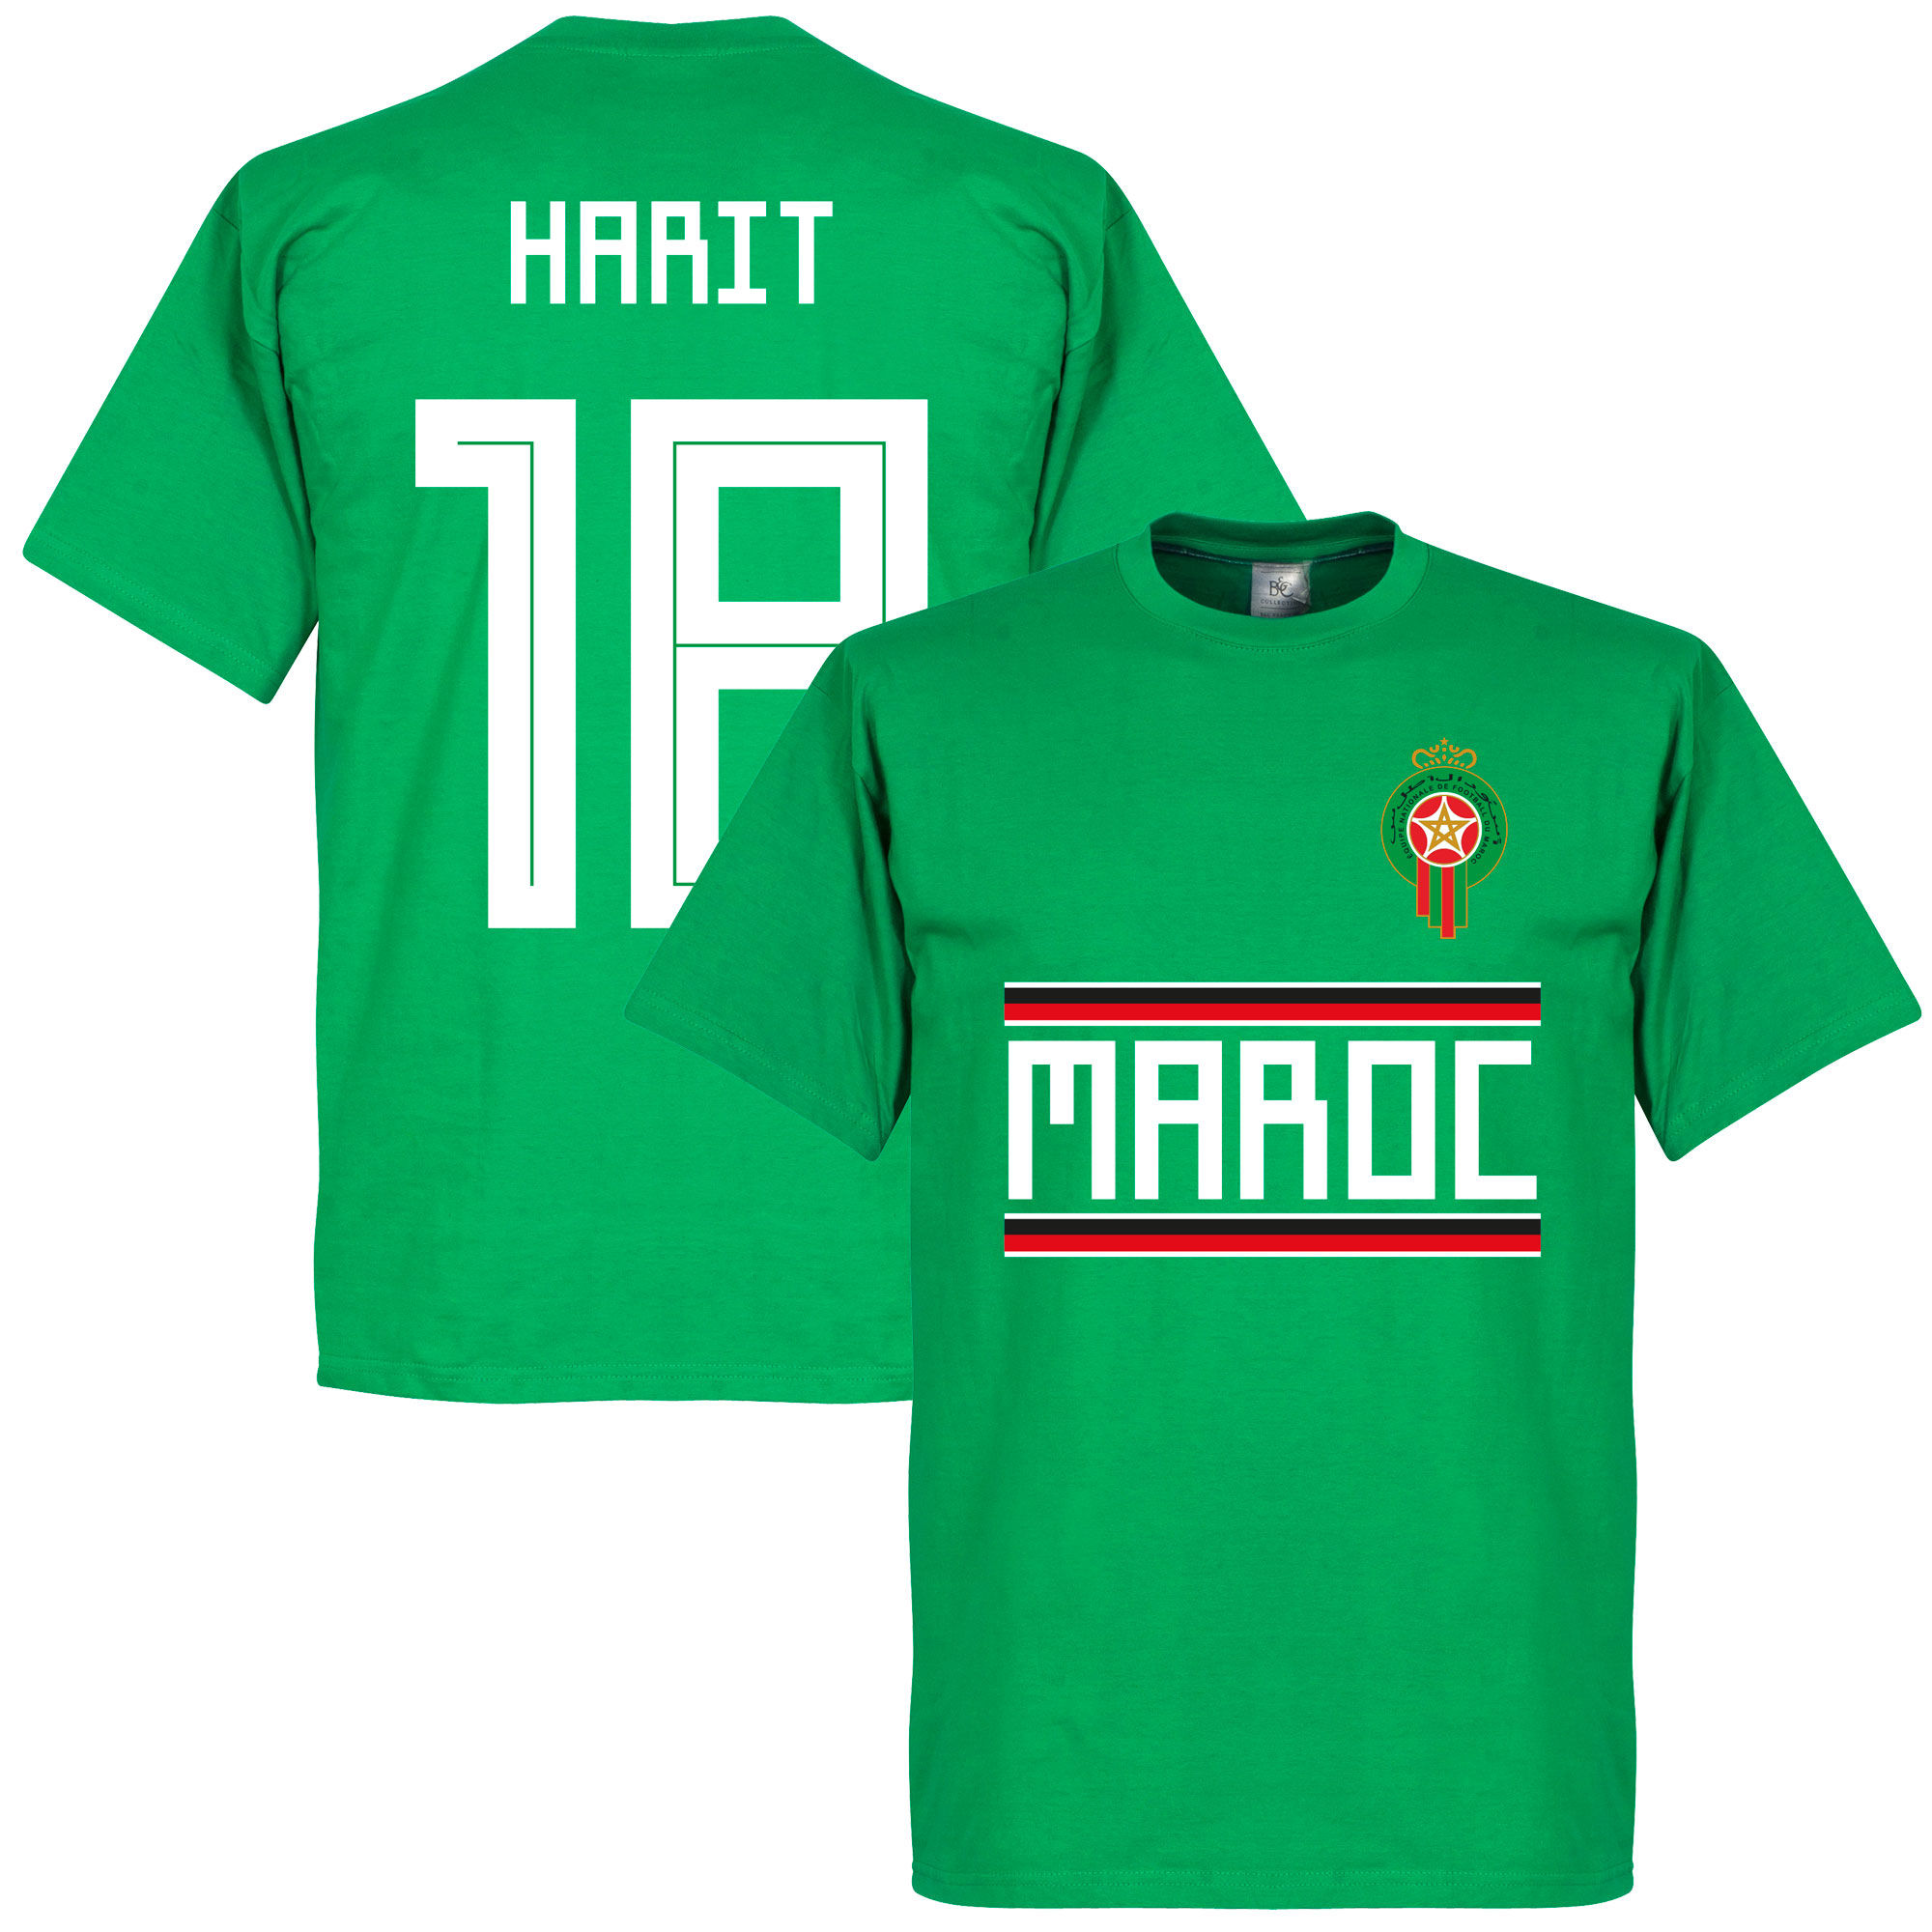 Maroko - Tričko - číslo 18, zelené, Amine Harit